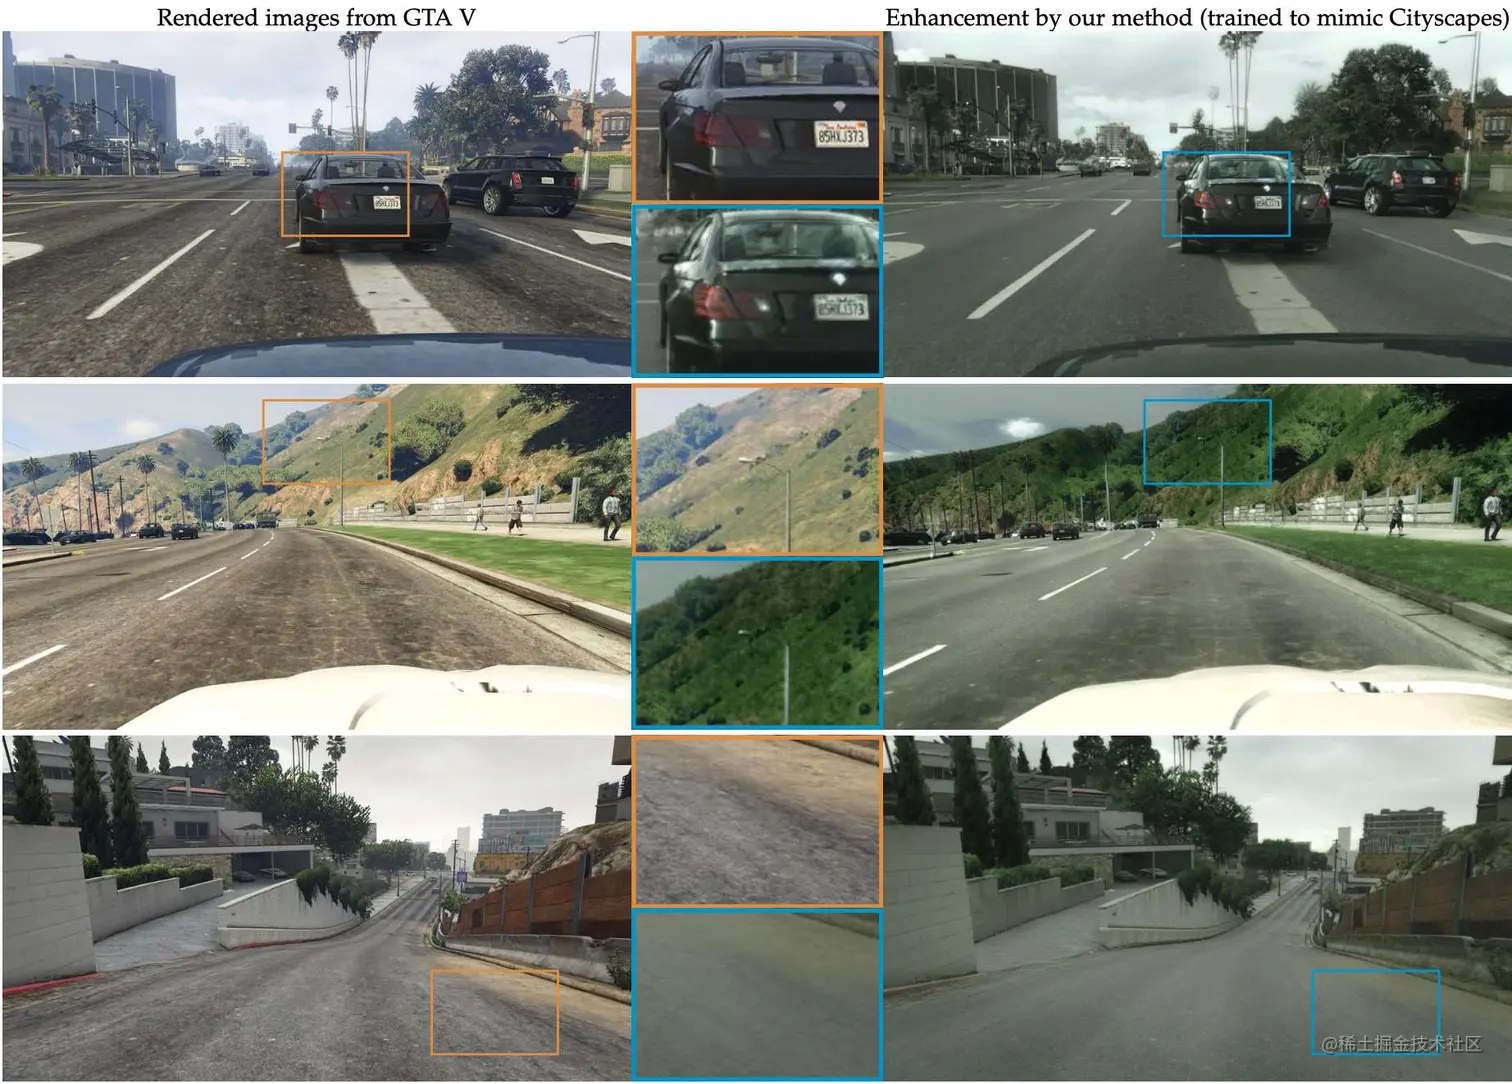 Fig.1. 我们用传统渲染引擎产出的中间G-buffer训练卷积网络，以增强渲染图片的真实感. 左边：现代游戏产出的帧(GTA V). 右边：通过模仿CitySpcapes的风格增强的效果。我们的增强效果是语义一致的，而且比较明显。举例，我们的方法增加了汽车辉光、树林块，以模仿German climate。中间的小插图放大了标记的区域。